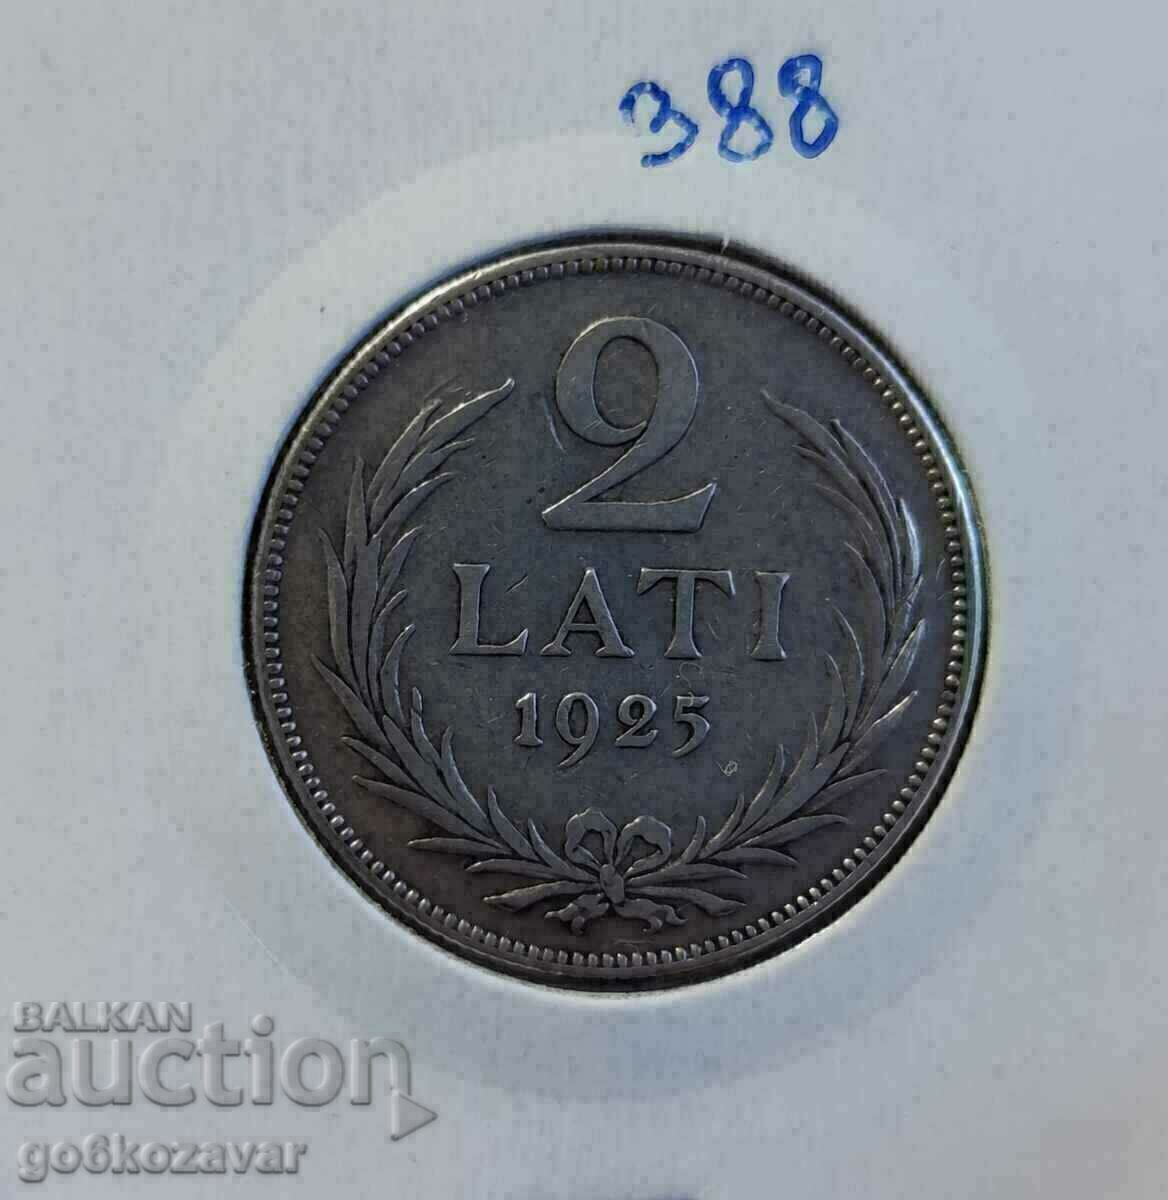 Latvia 2 lats 1925 Silver!